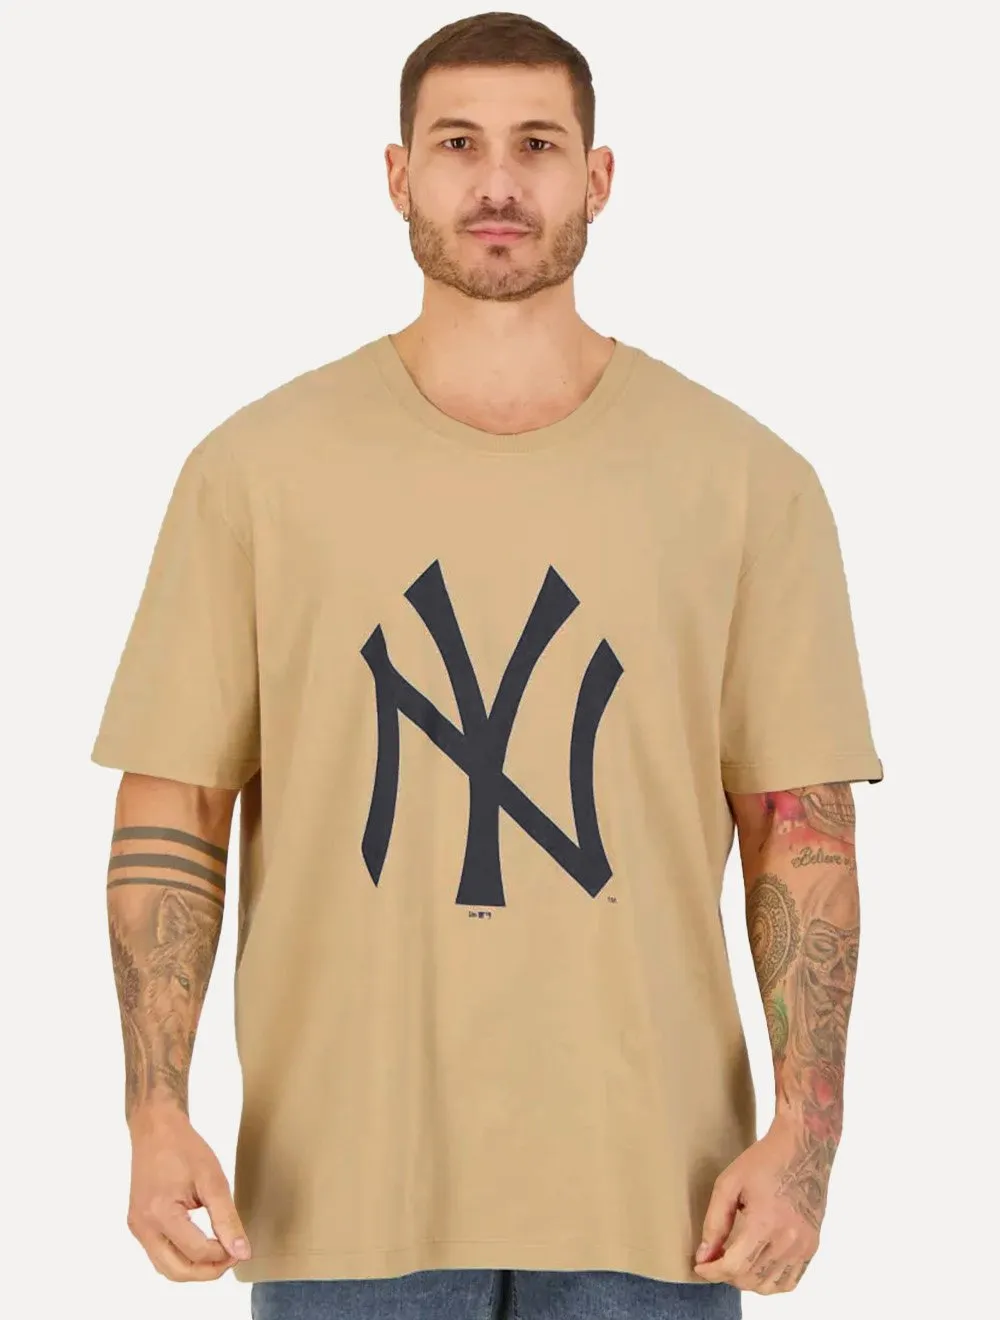 Camiseta New Era Masculina MLB New York Yankees Caqui